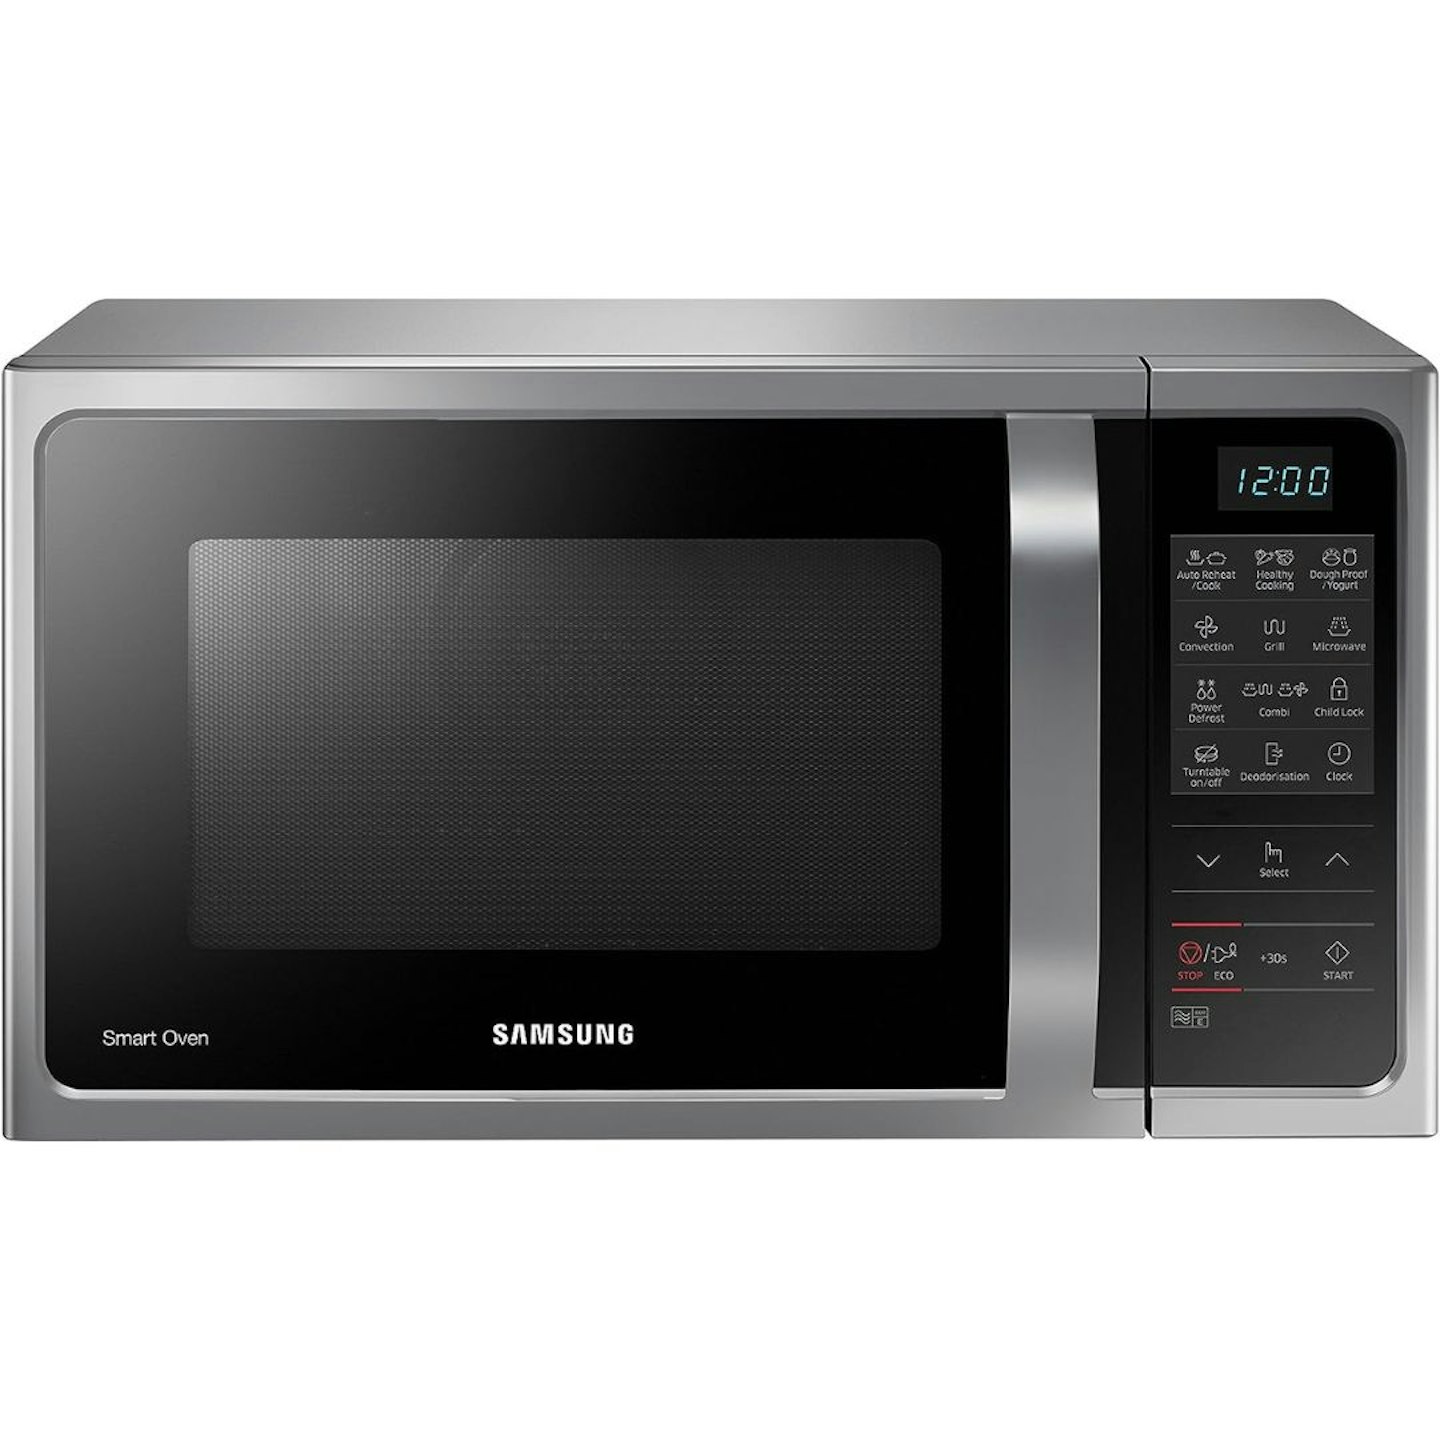 Samsung MC28H5013AS Combination Microwave